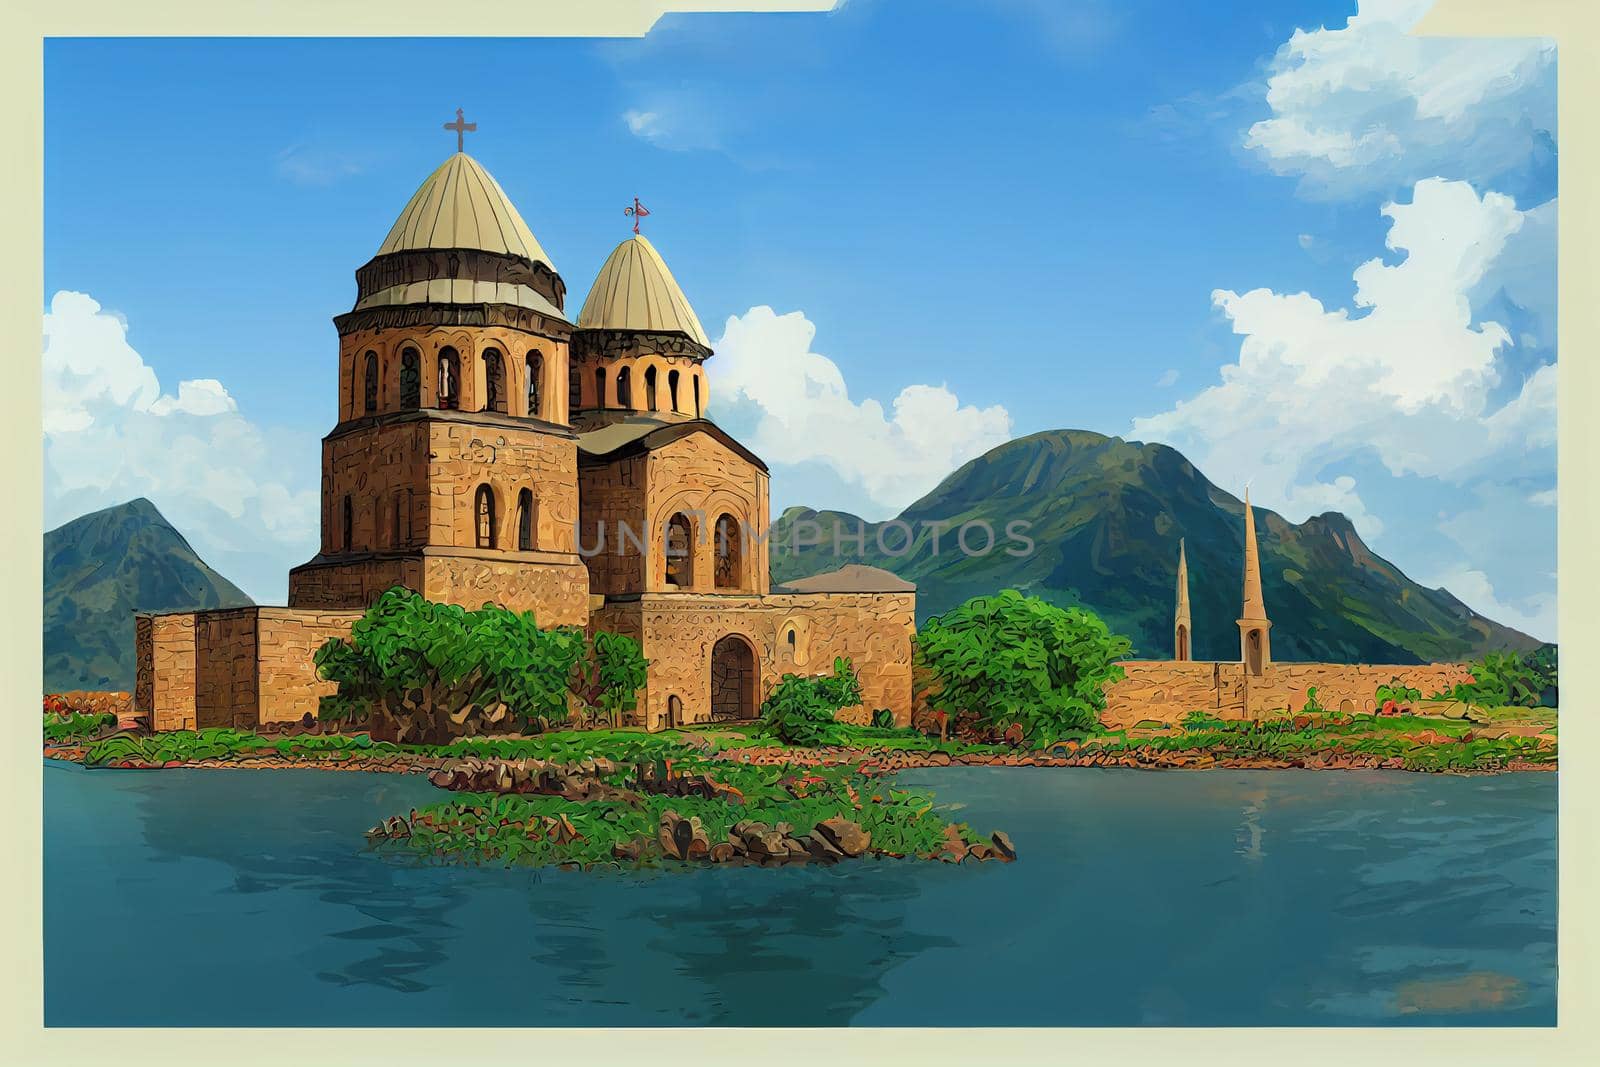 Akdamar Island in Van Lake, The Albanian Cathedral  by 2ragon